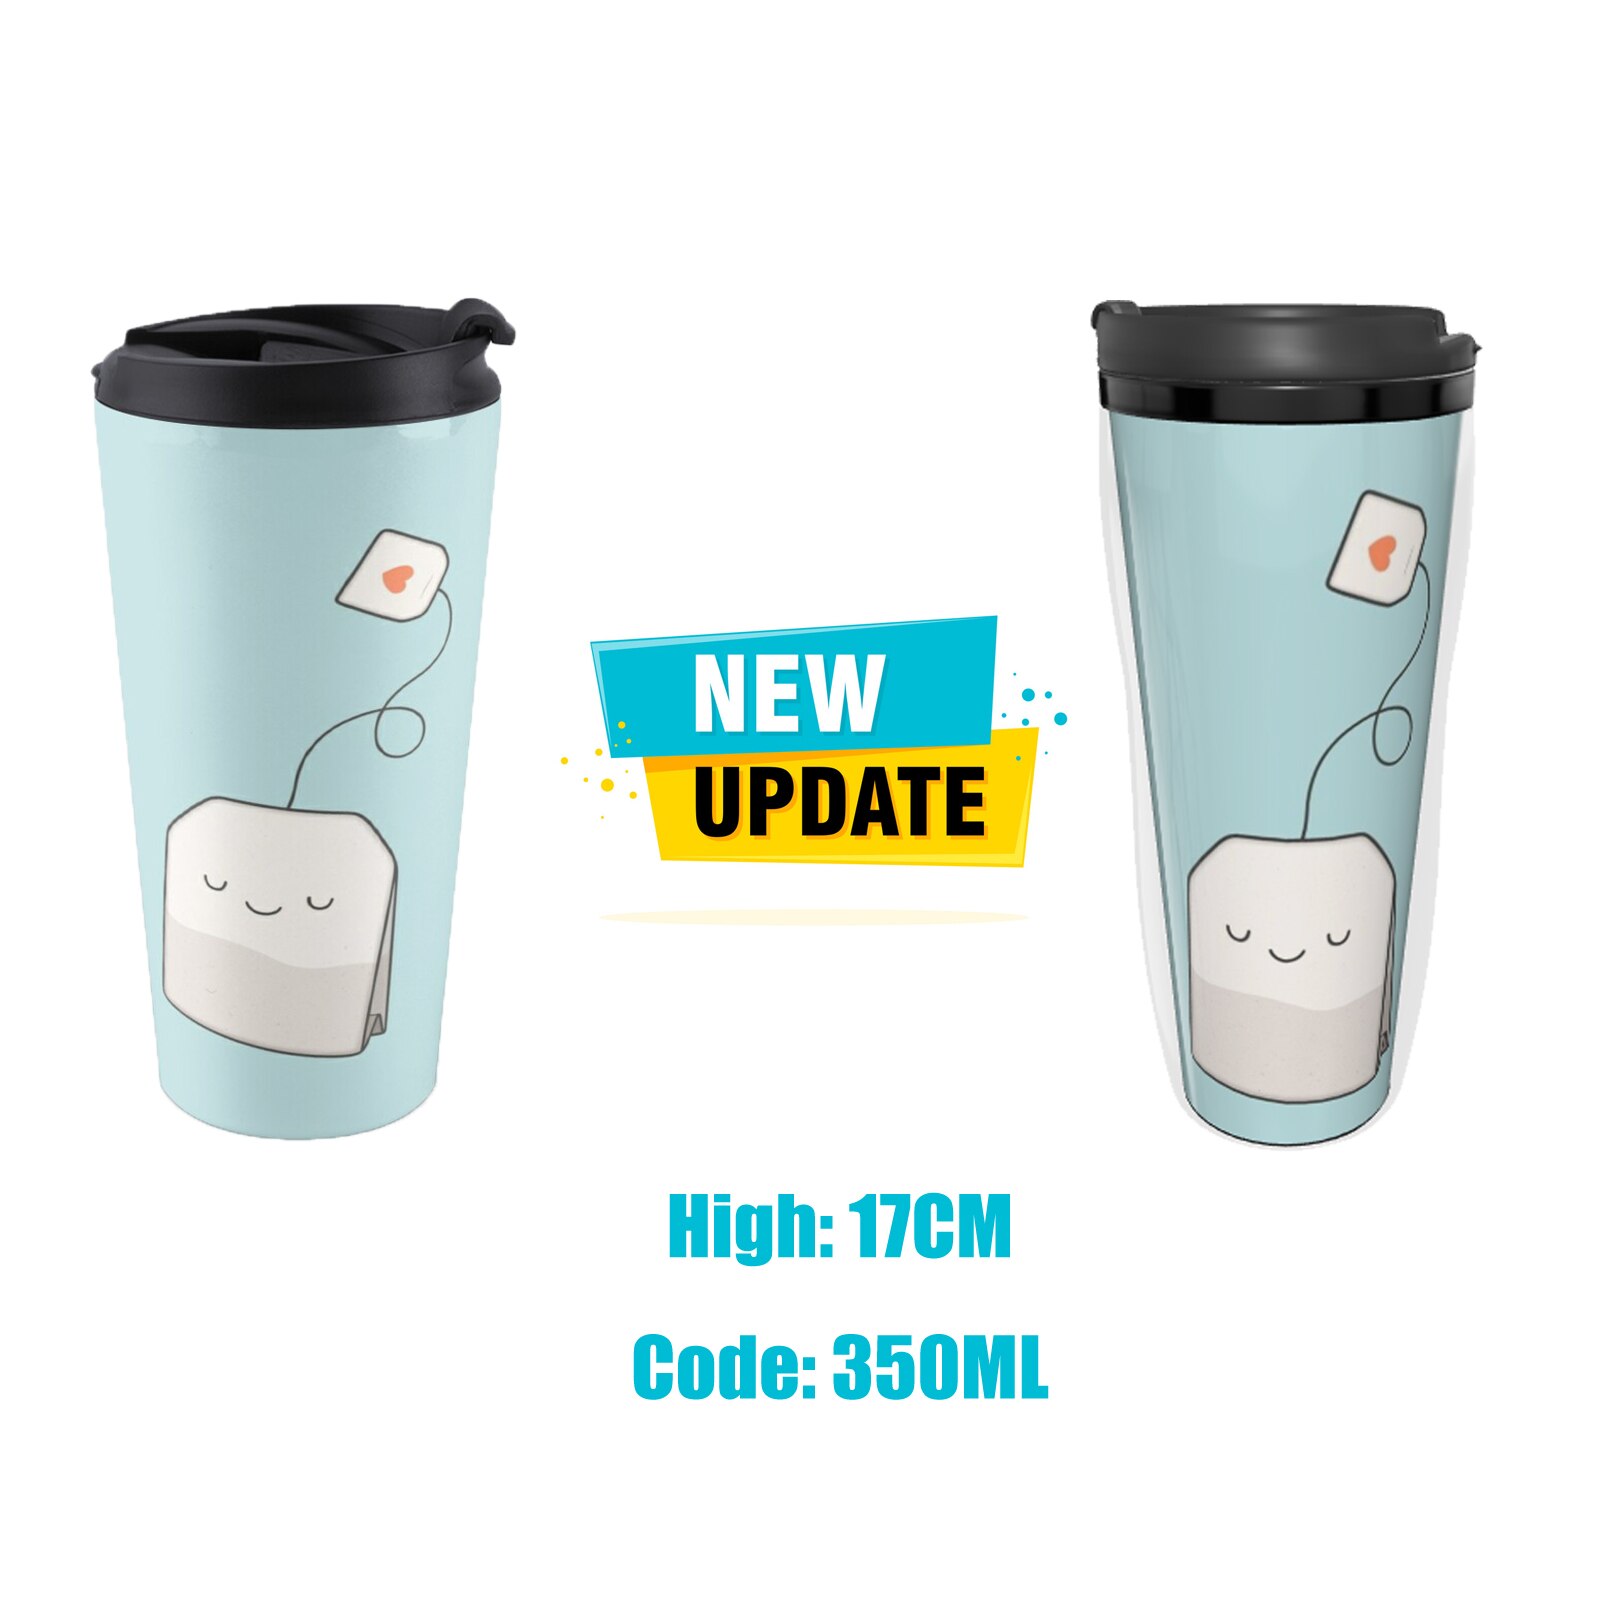 flavor savior Travel Coffee Mug Creative Cups